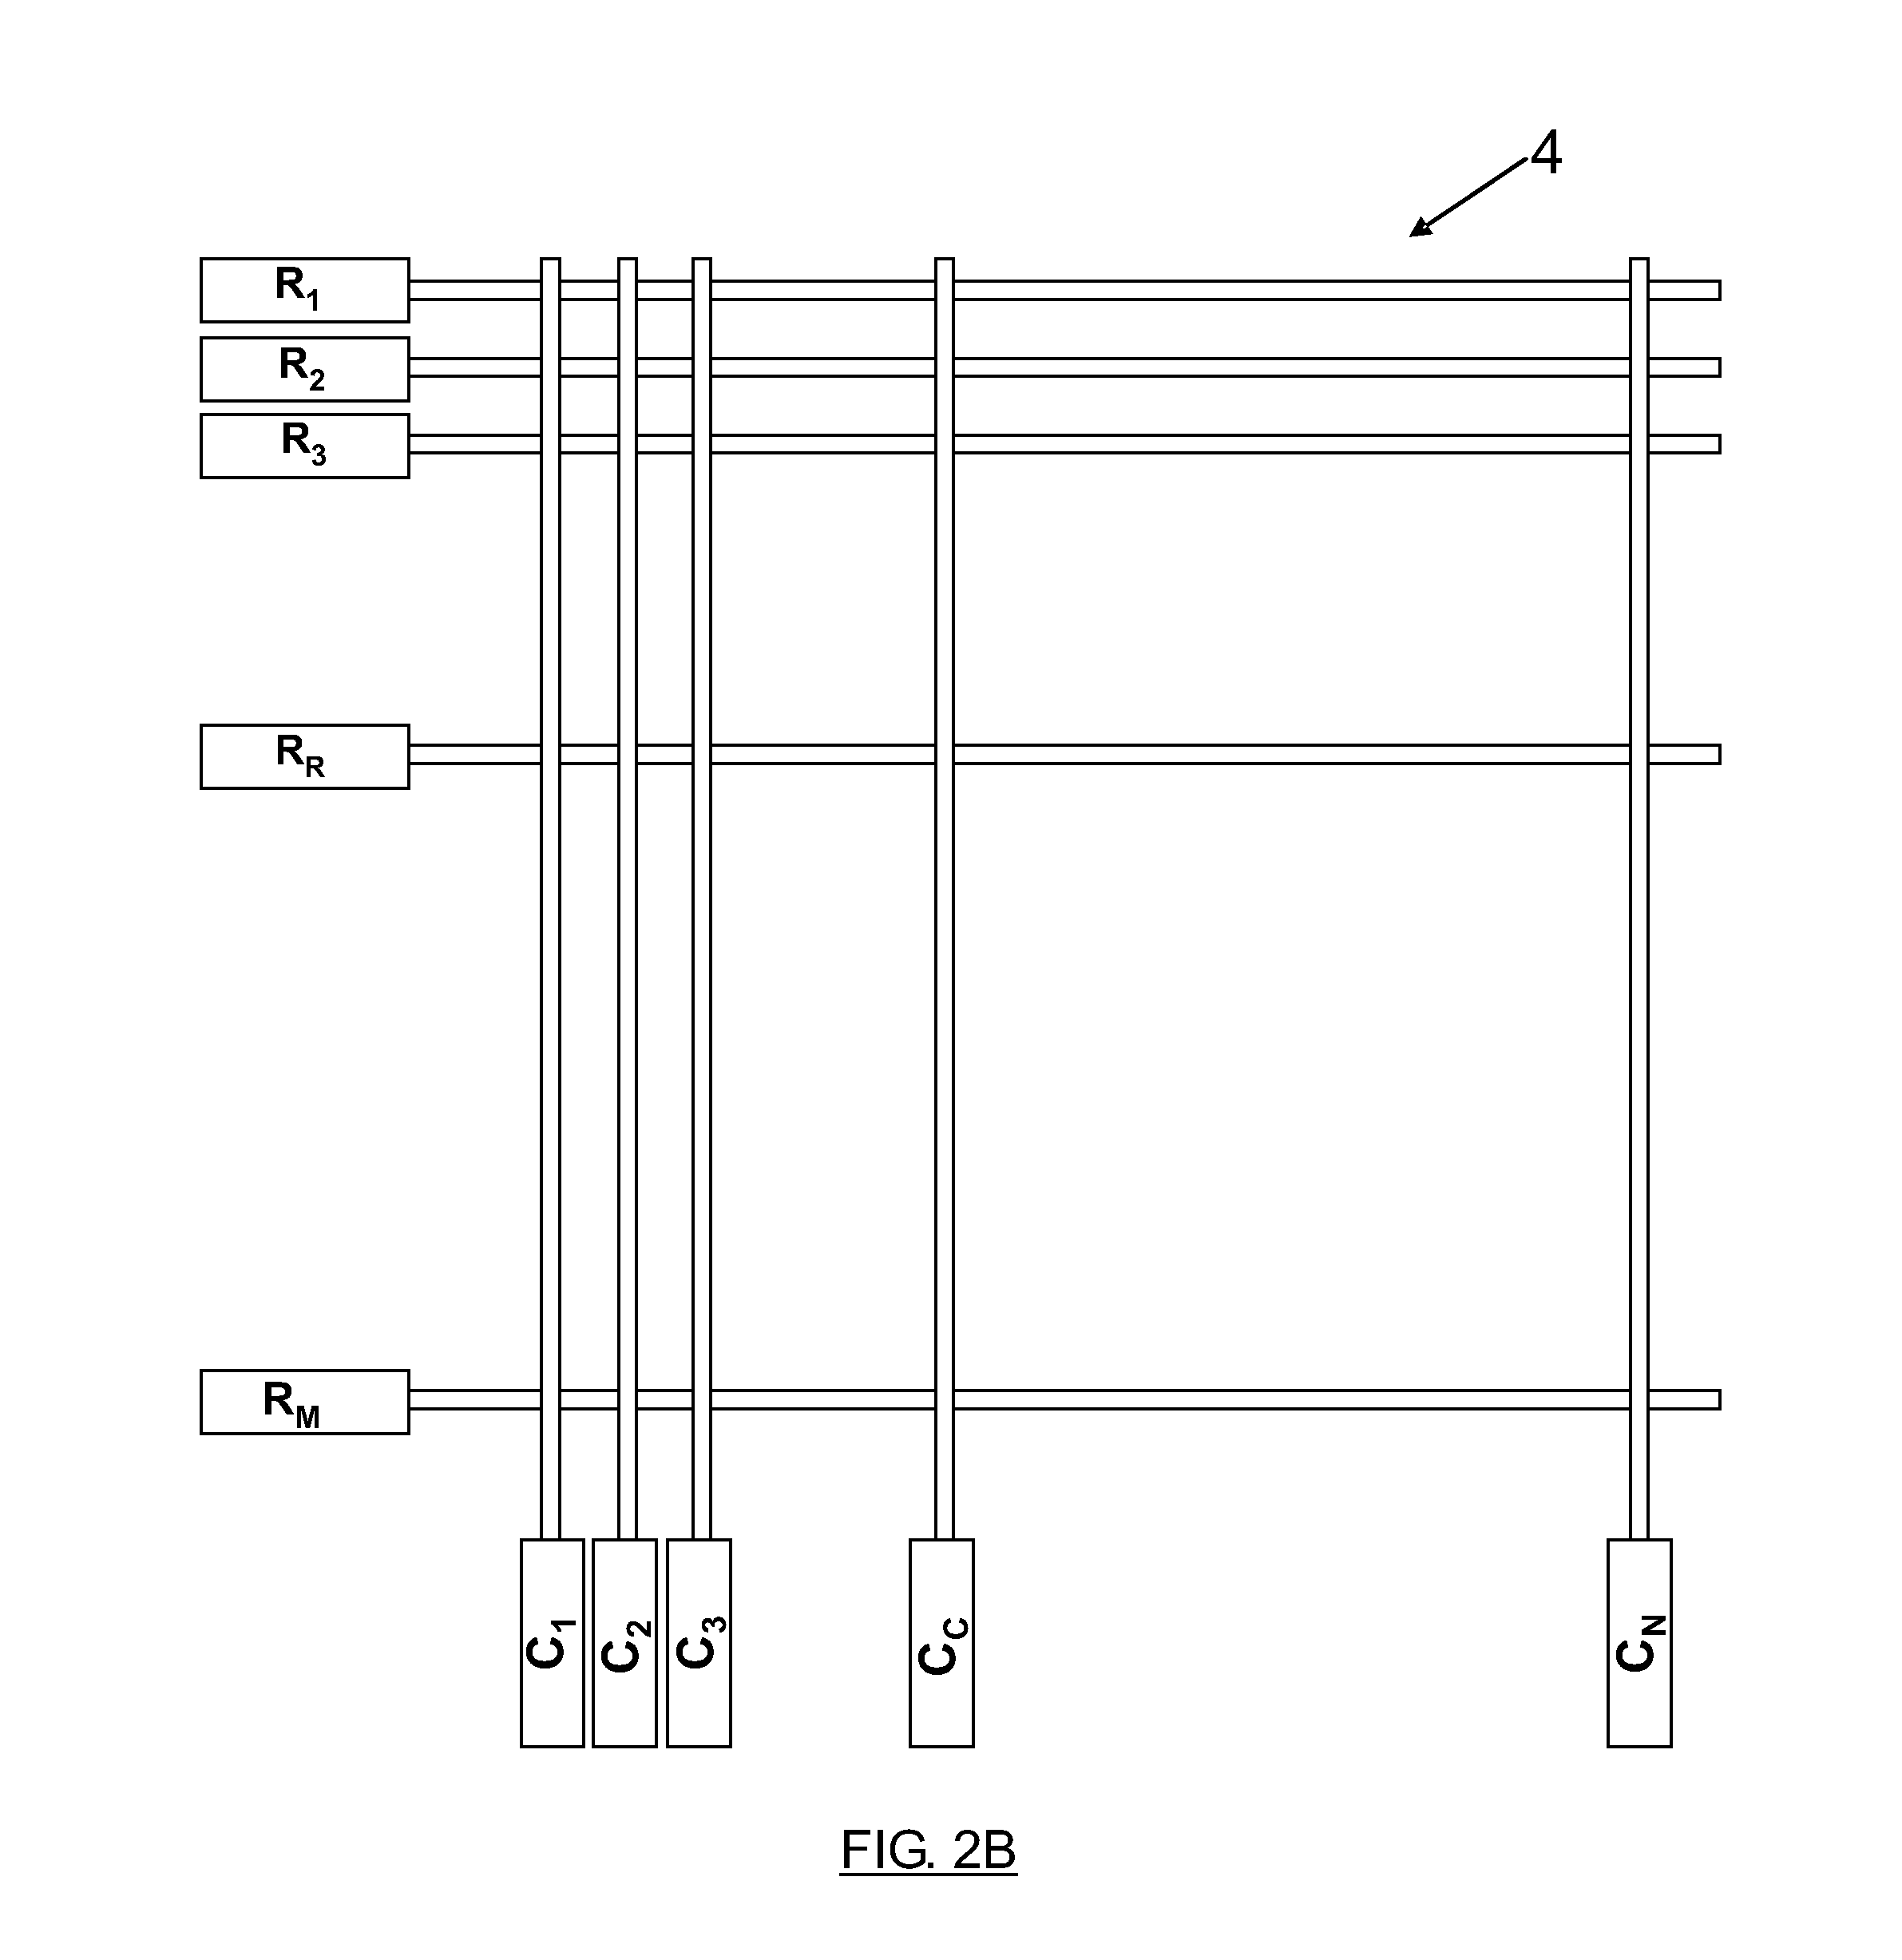 Method and apparatus for driving a dielectric elastomer matrix avoiding crosstalk